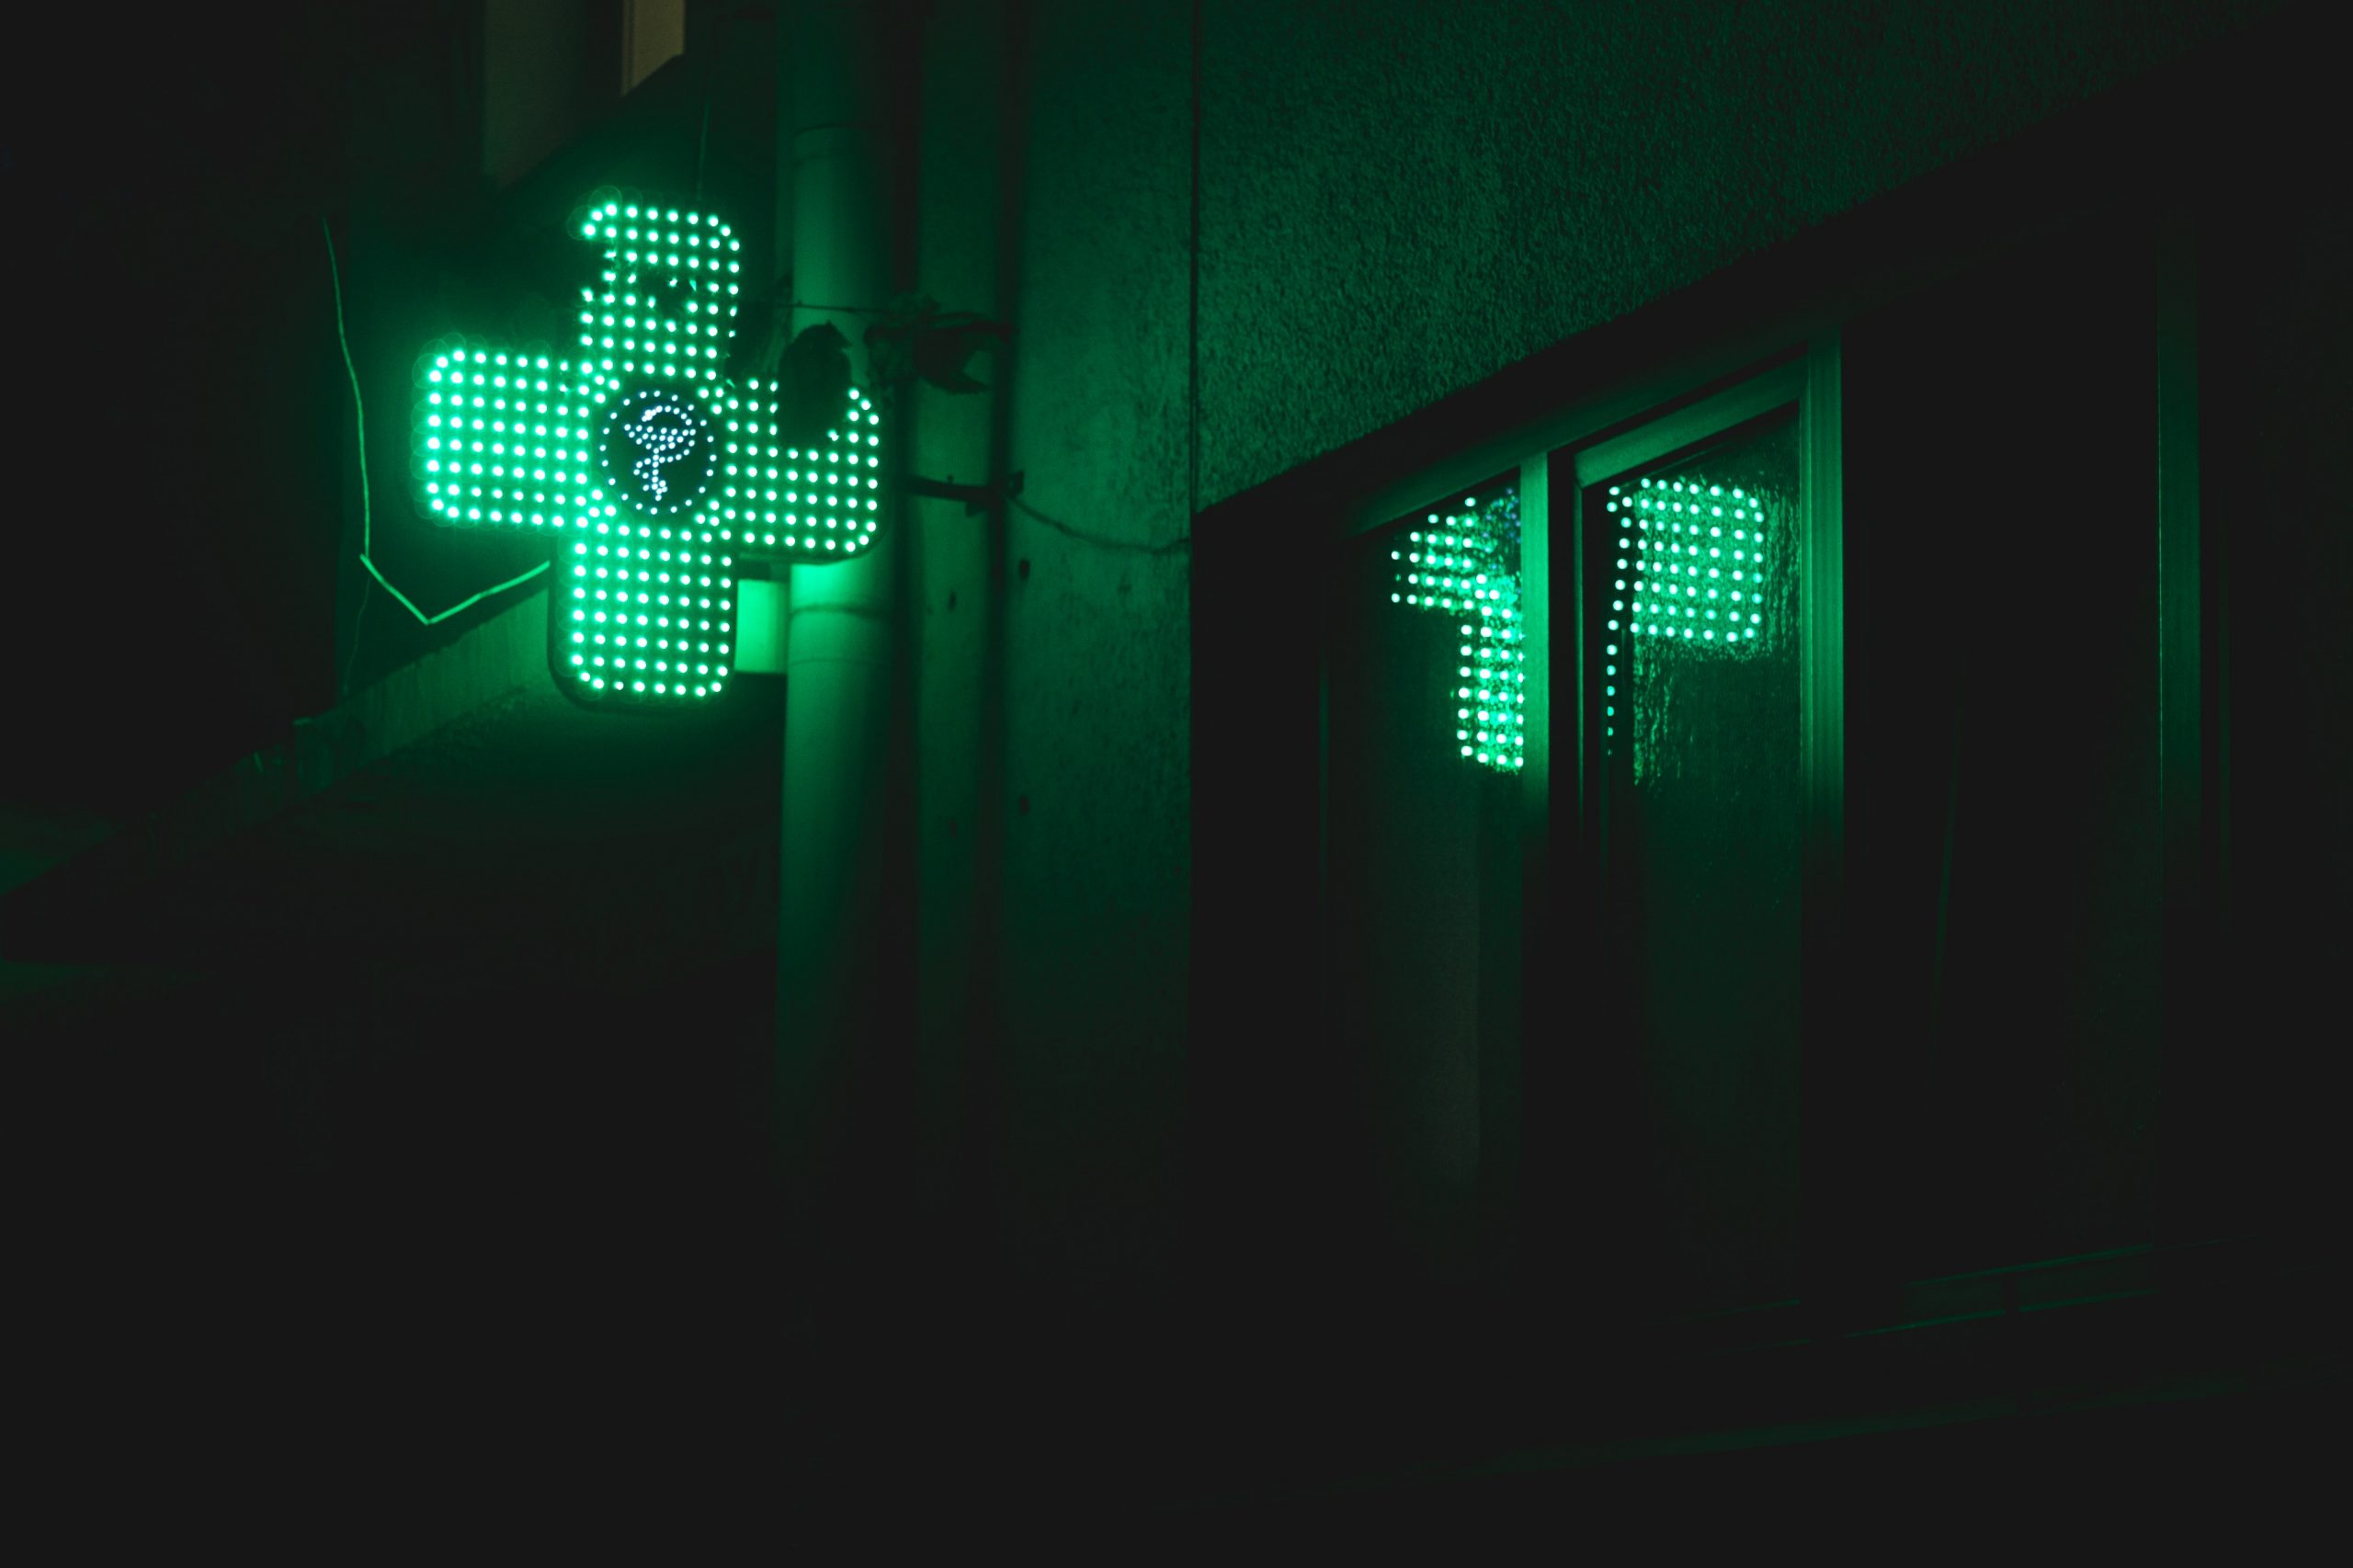 green pharmacy symbol in the shape of a cross is alight on a dark night